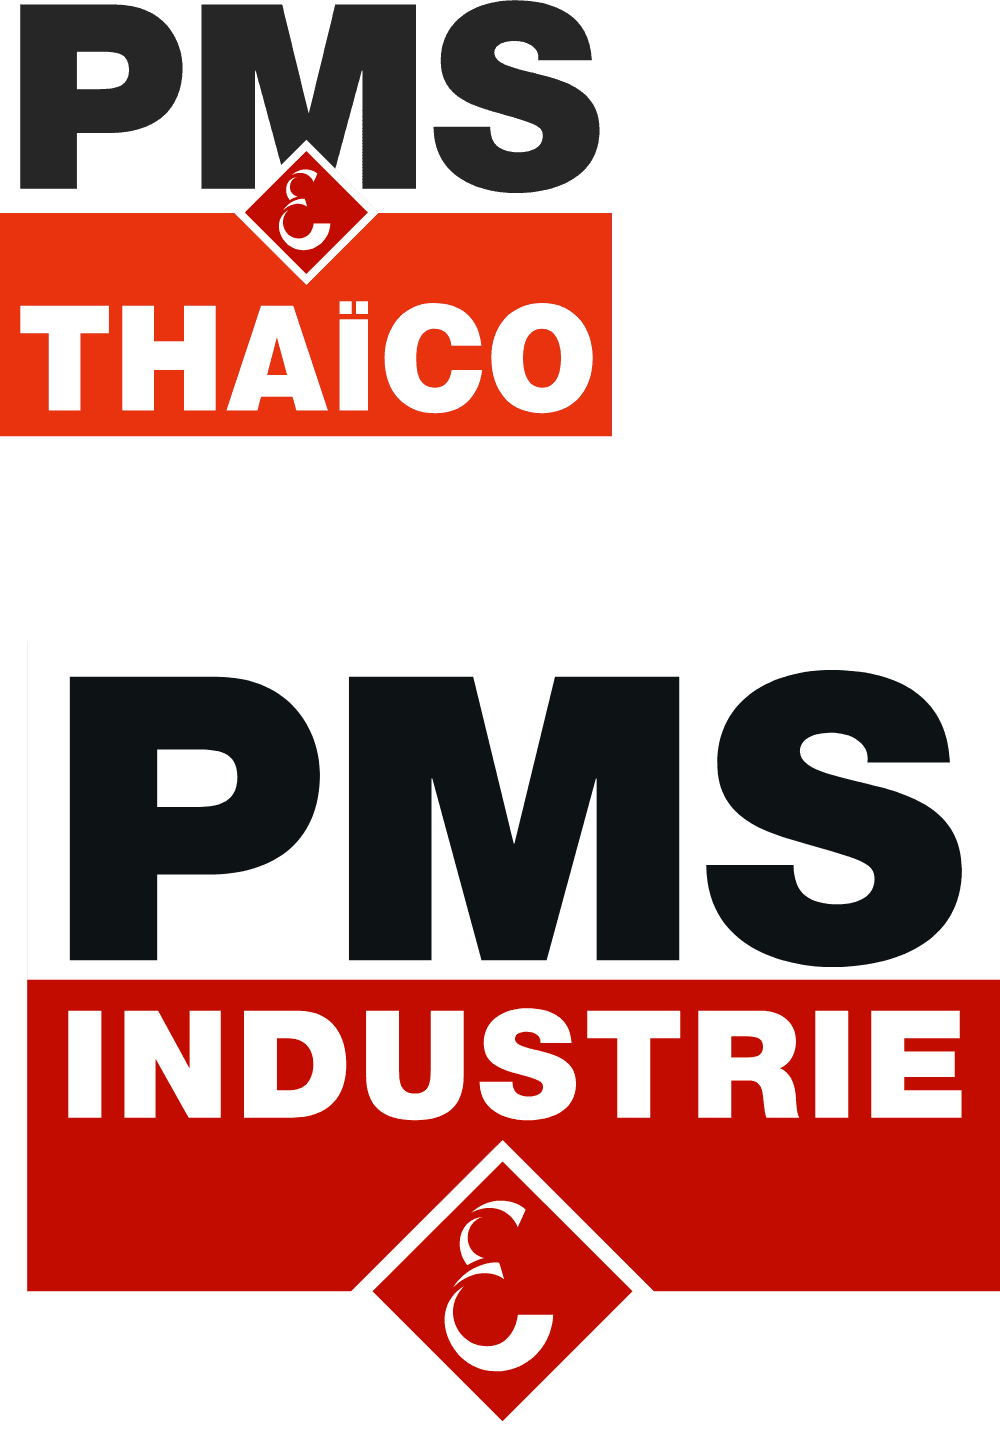 PMS Thaico Logo download